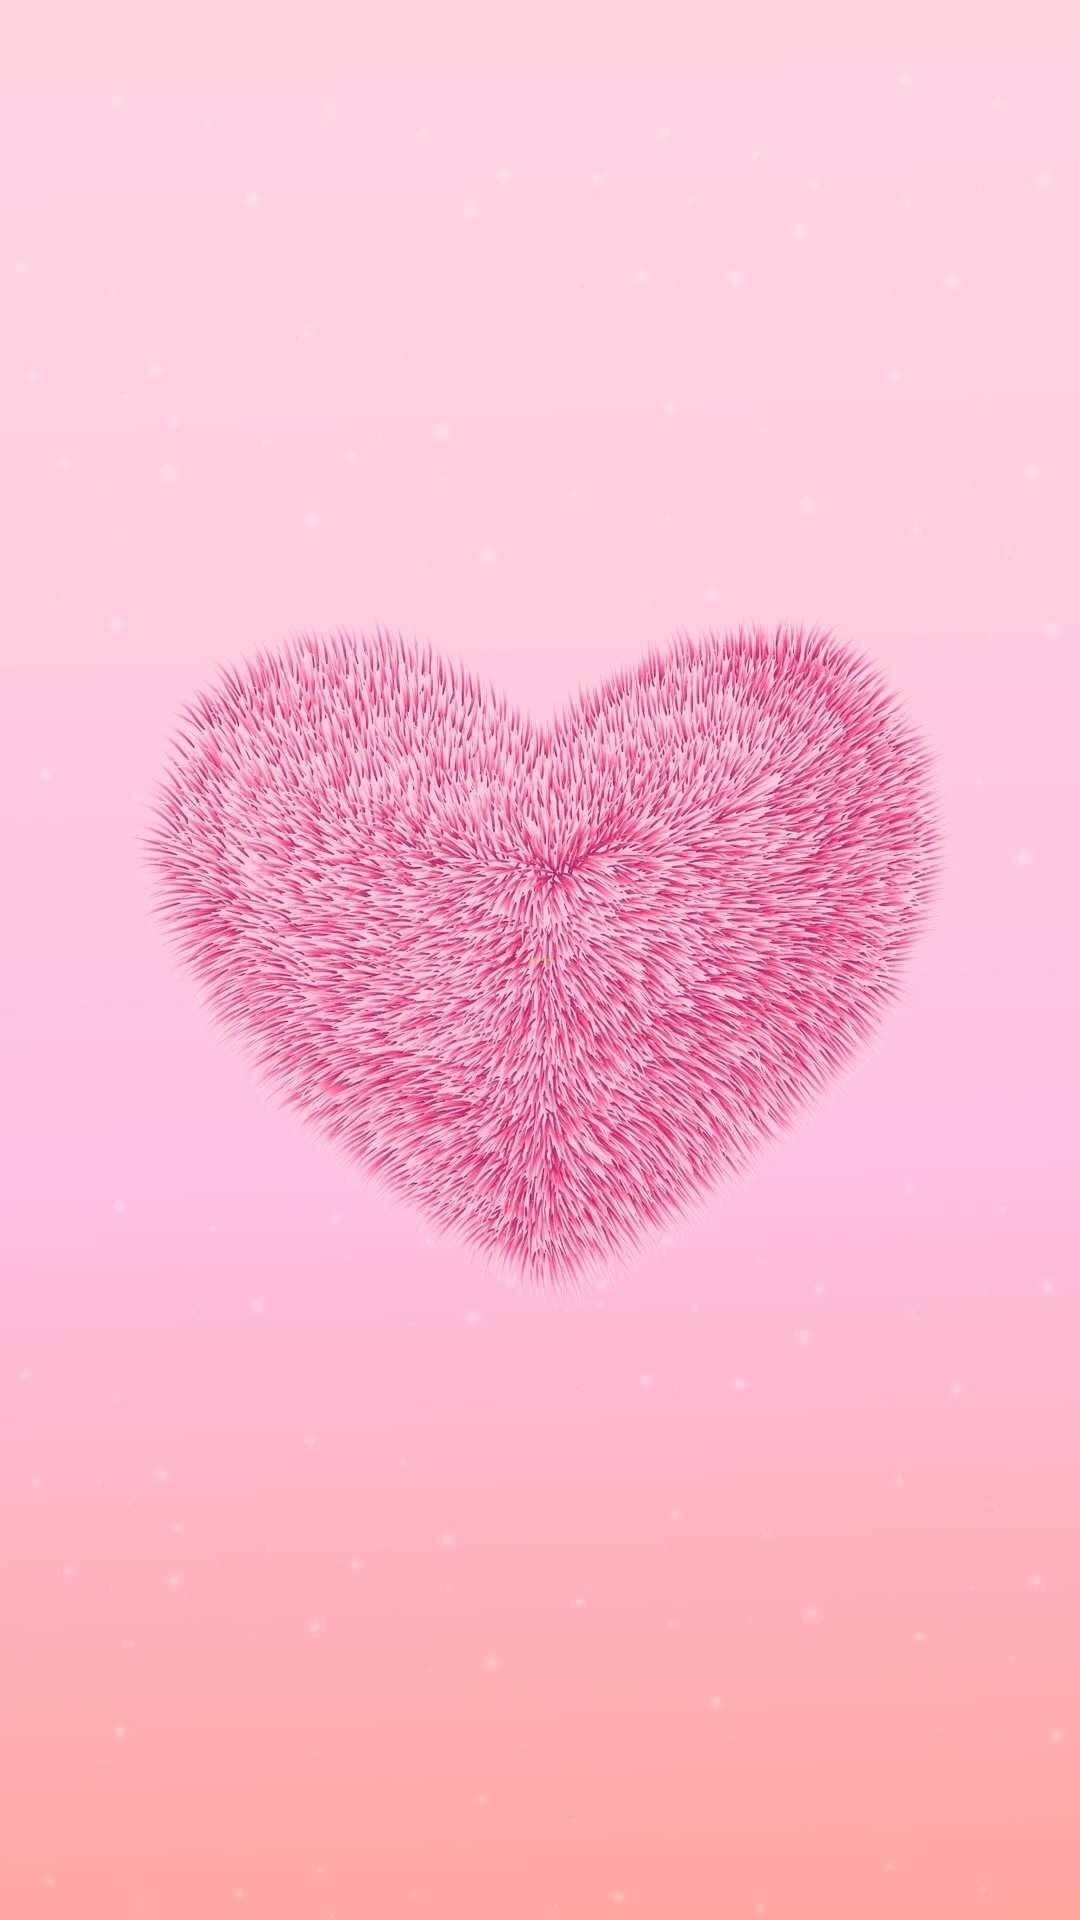 Cute Heart Wallpaper